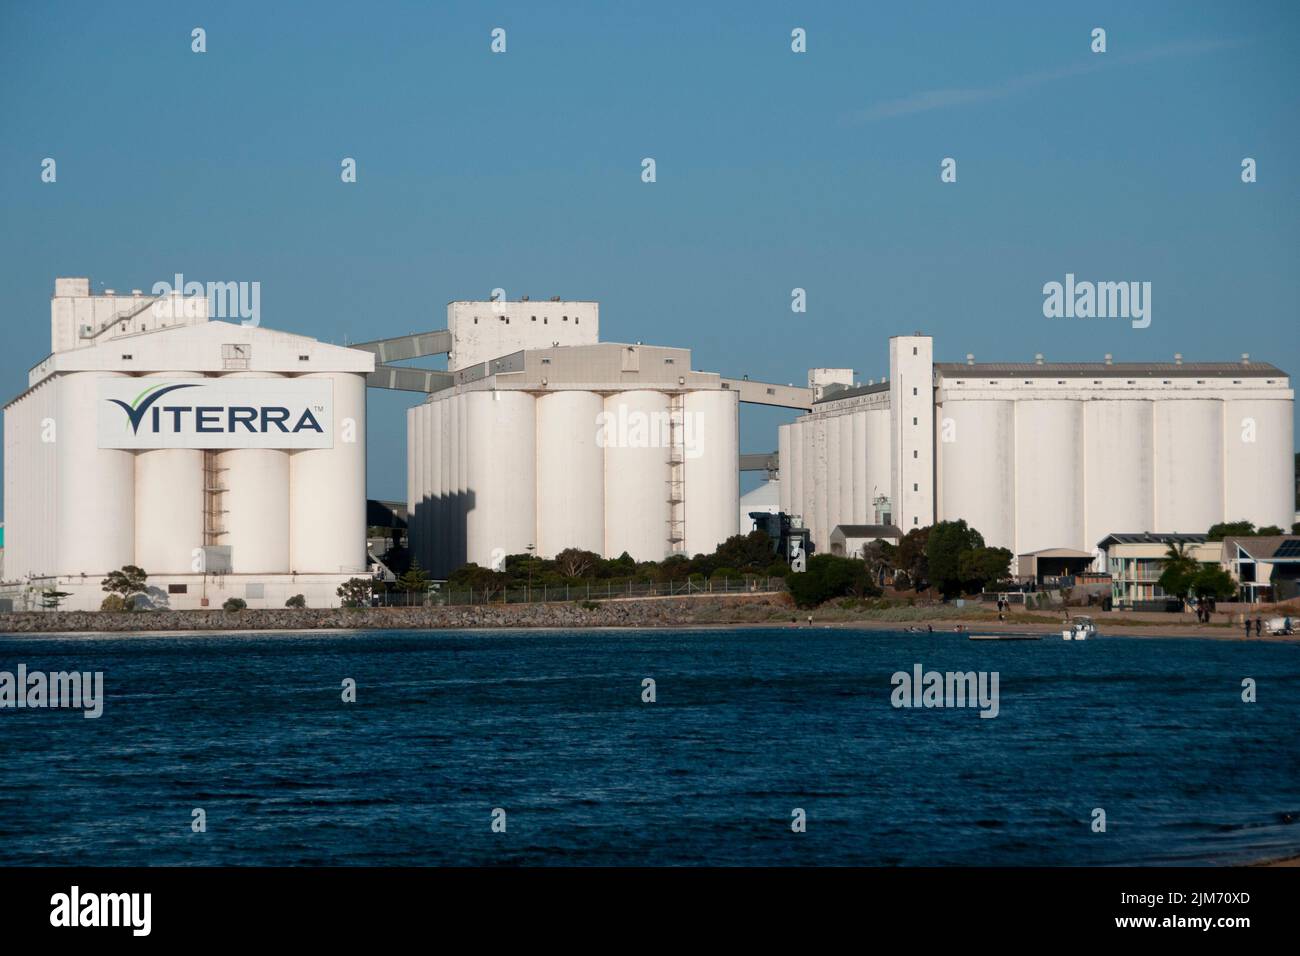 Port Lincoln, Australia - April 23, 2022: Viterra Silos for Grain Storage Stock Photo